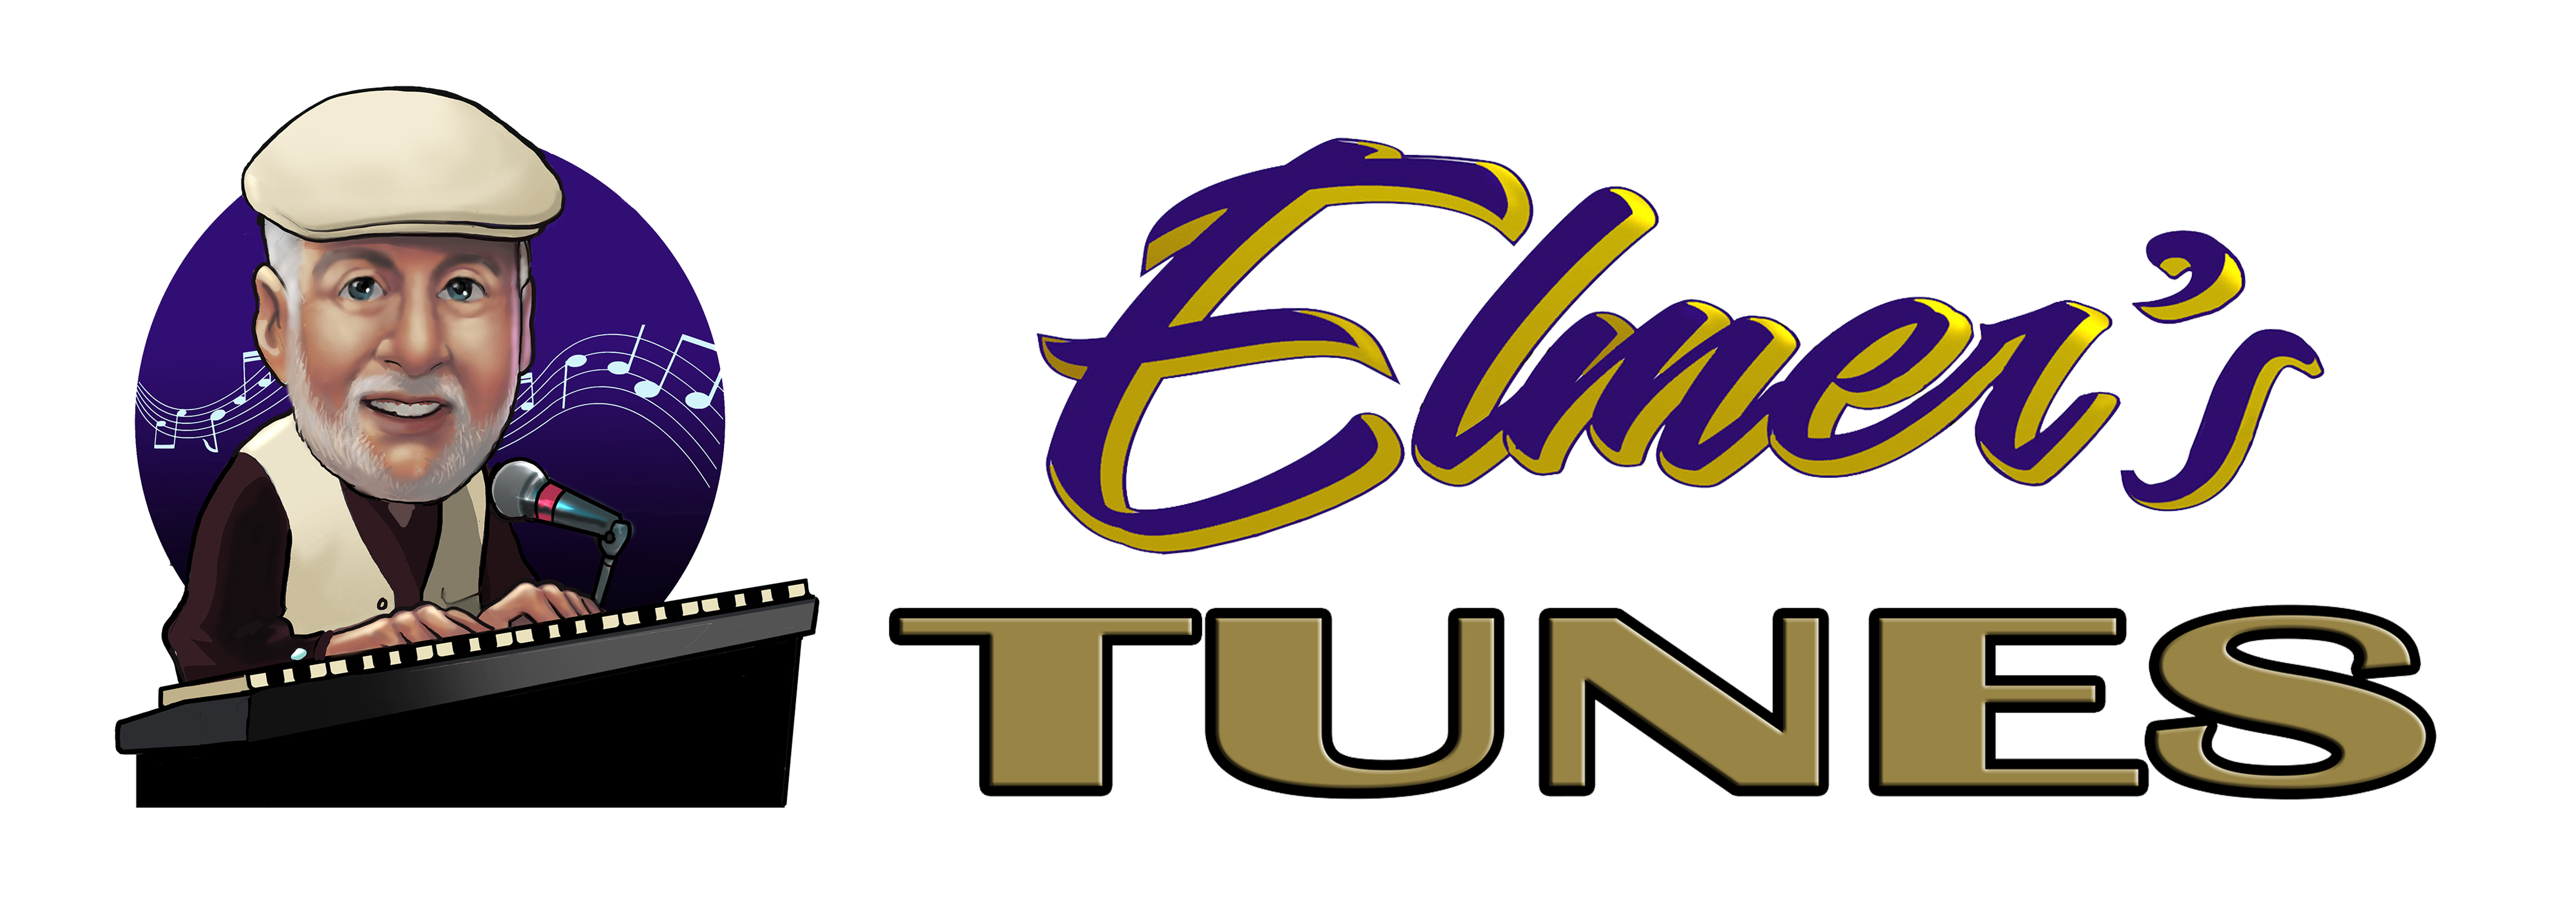 Elmer's Tunes